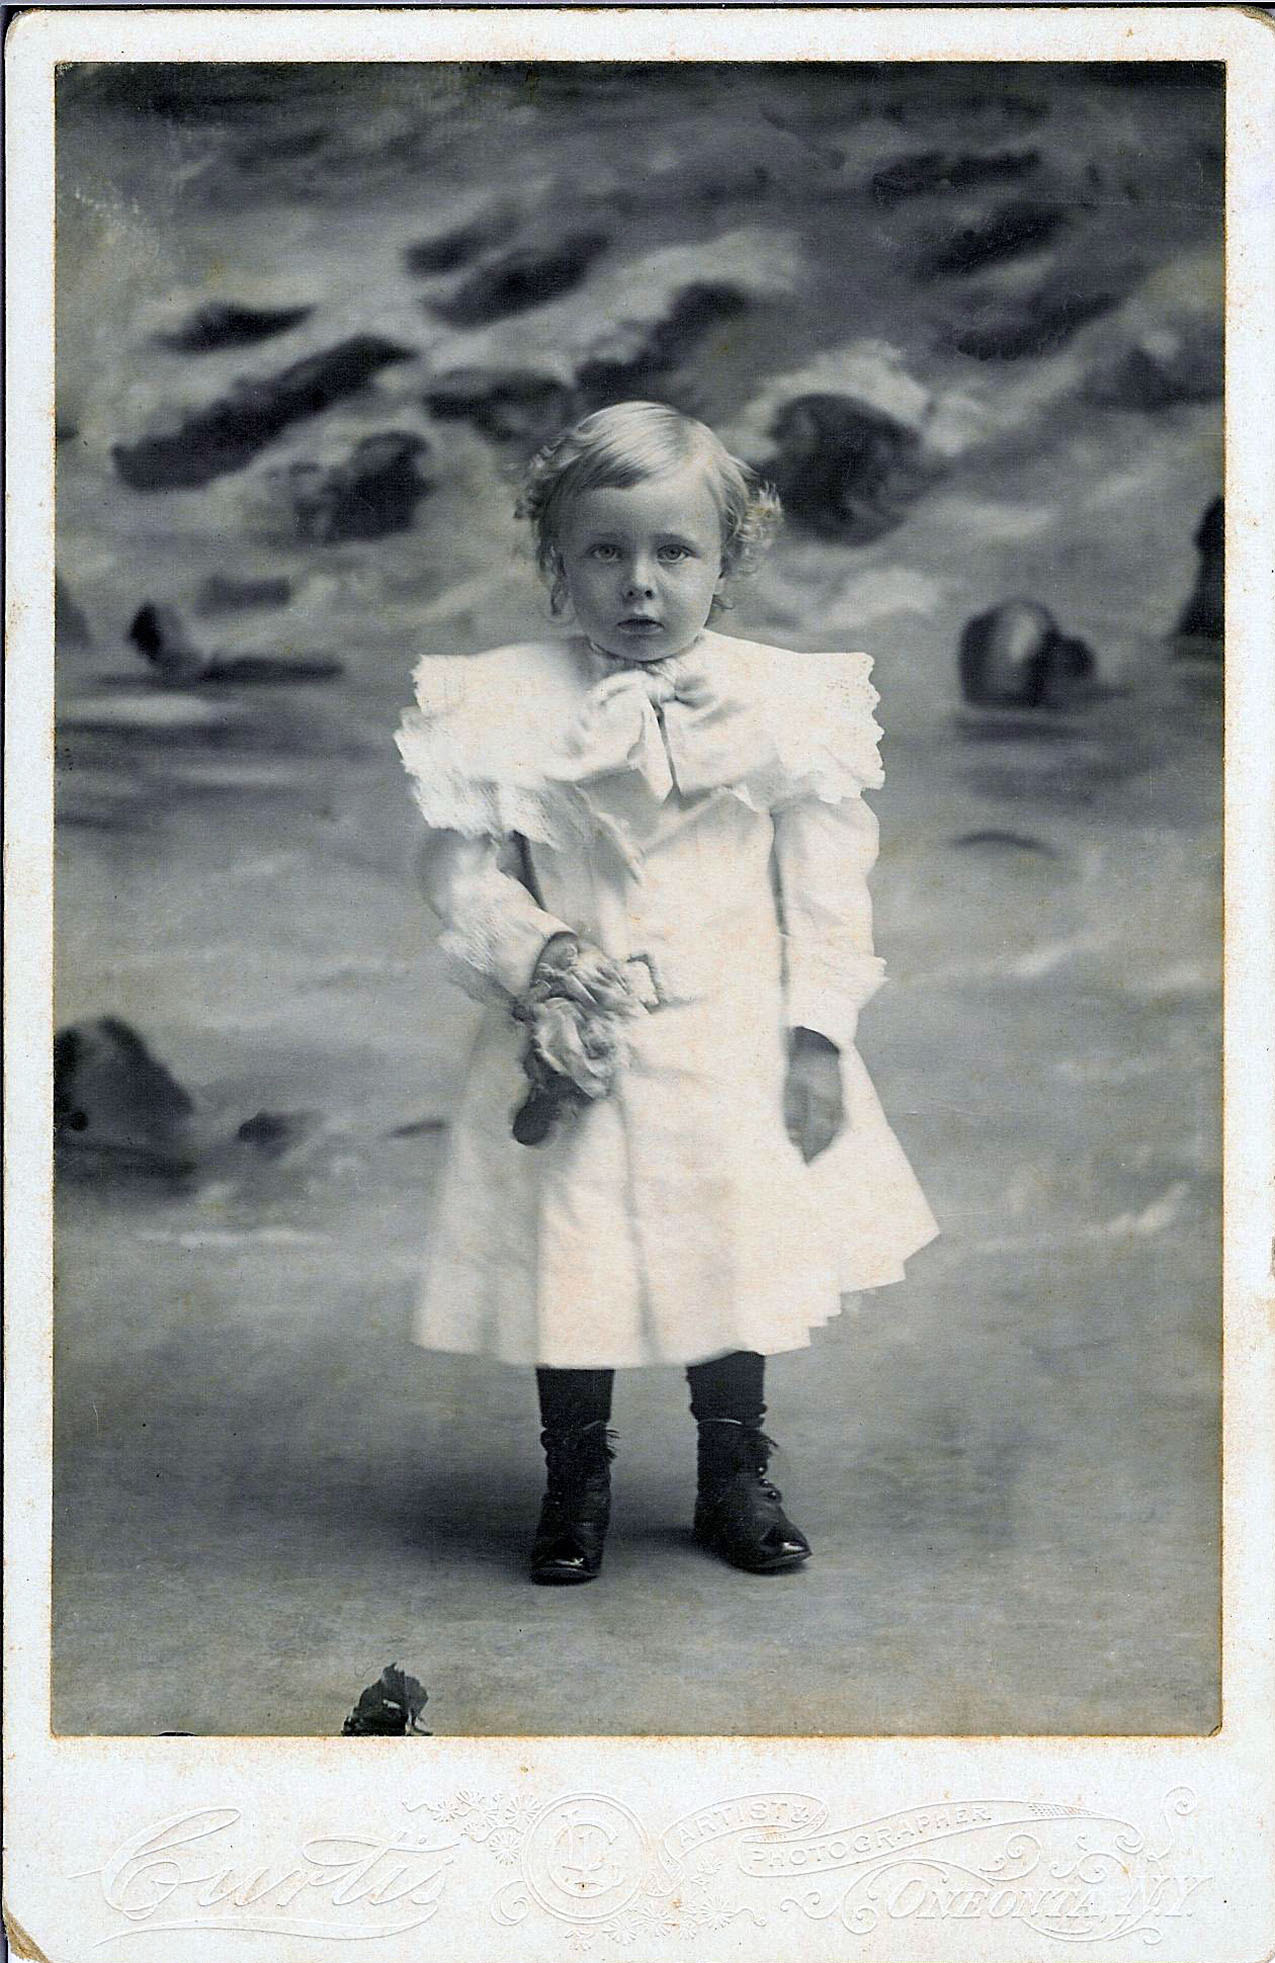 Photo of Harold Relyea as a toddler.